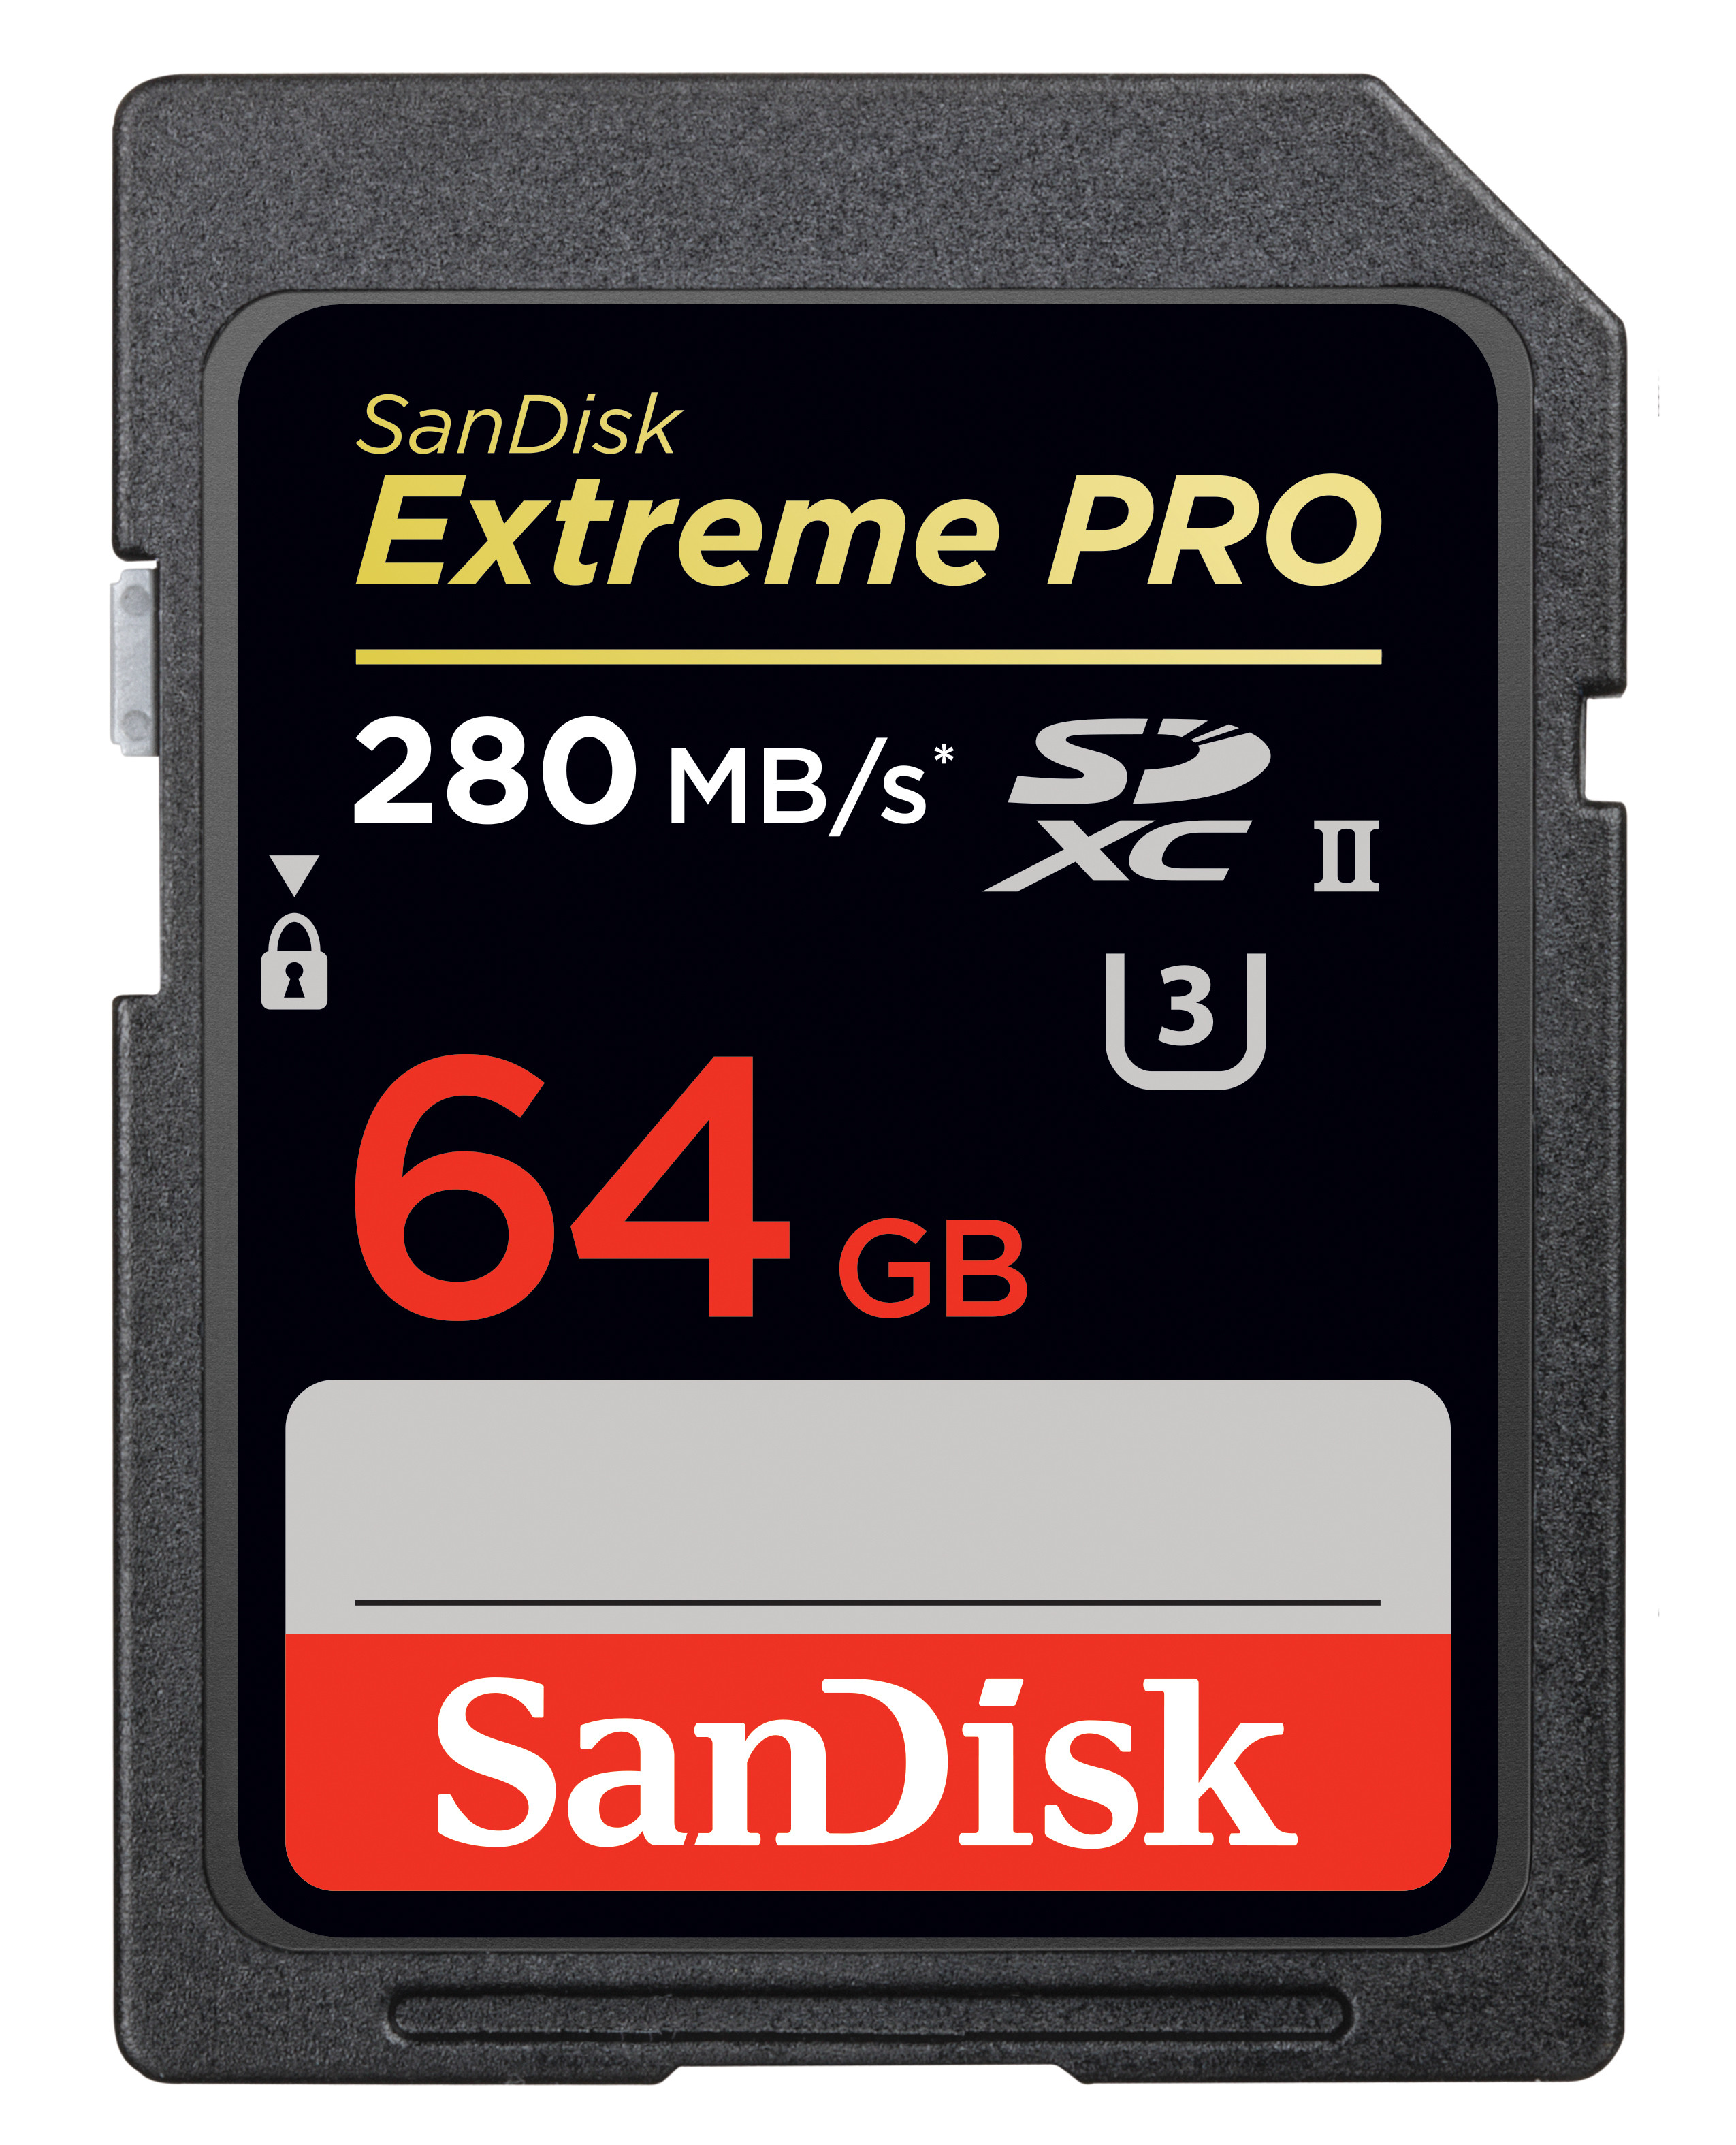 SanDisk Announces World's Fastest SD Card TechPowerUp Forums